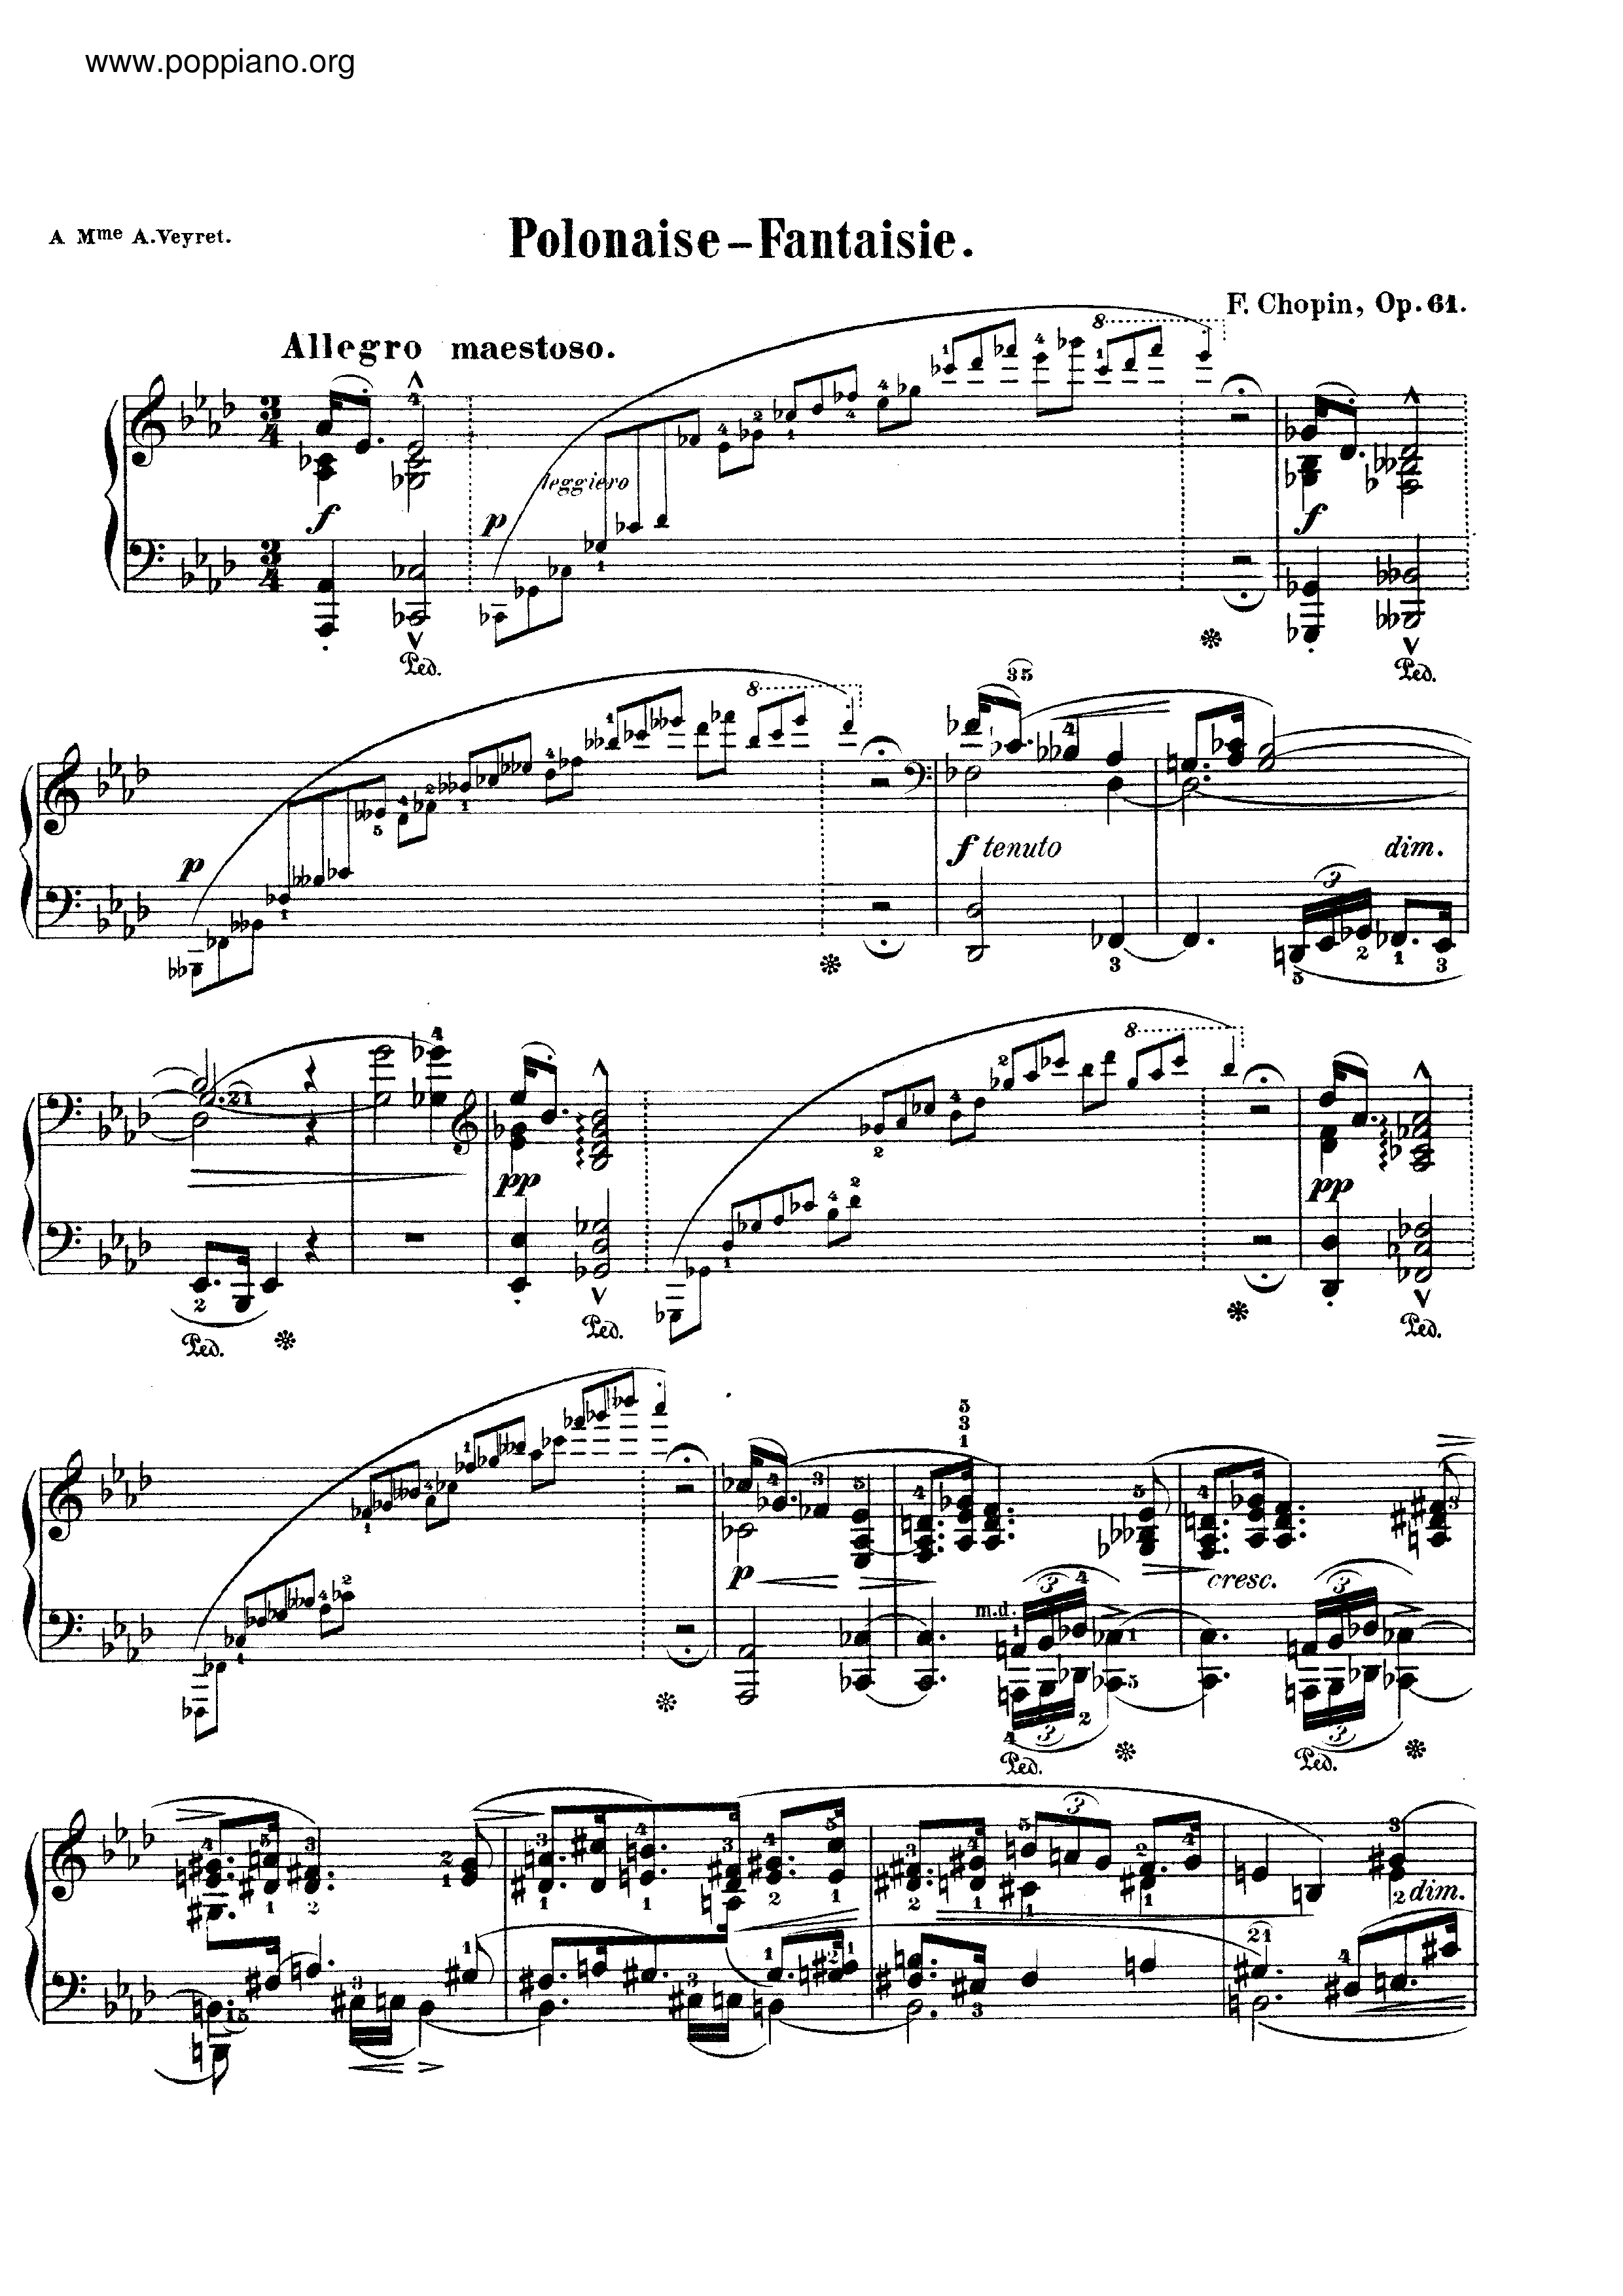 Polonaise fantasie, Op. 61ピアノ譜